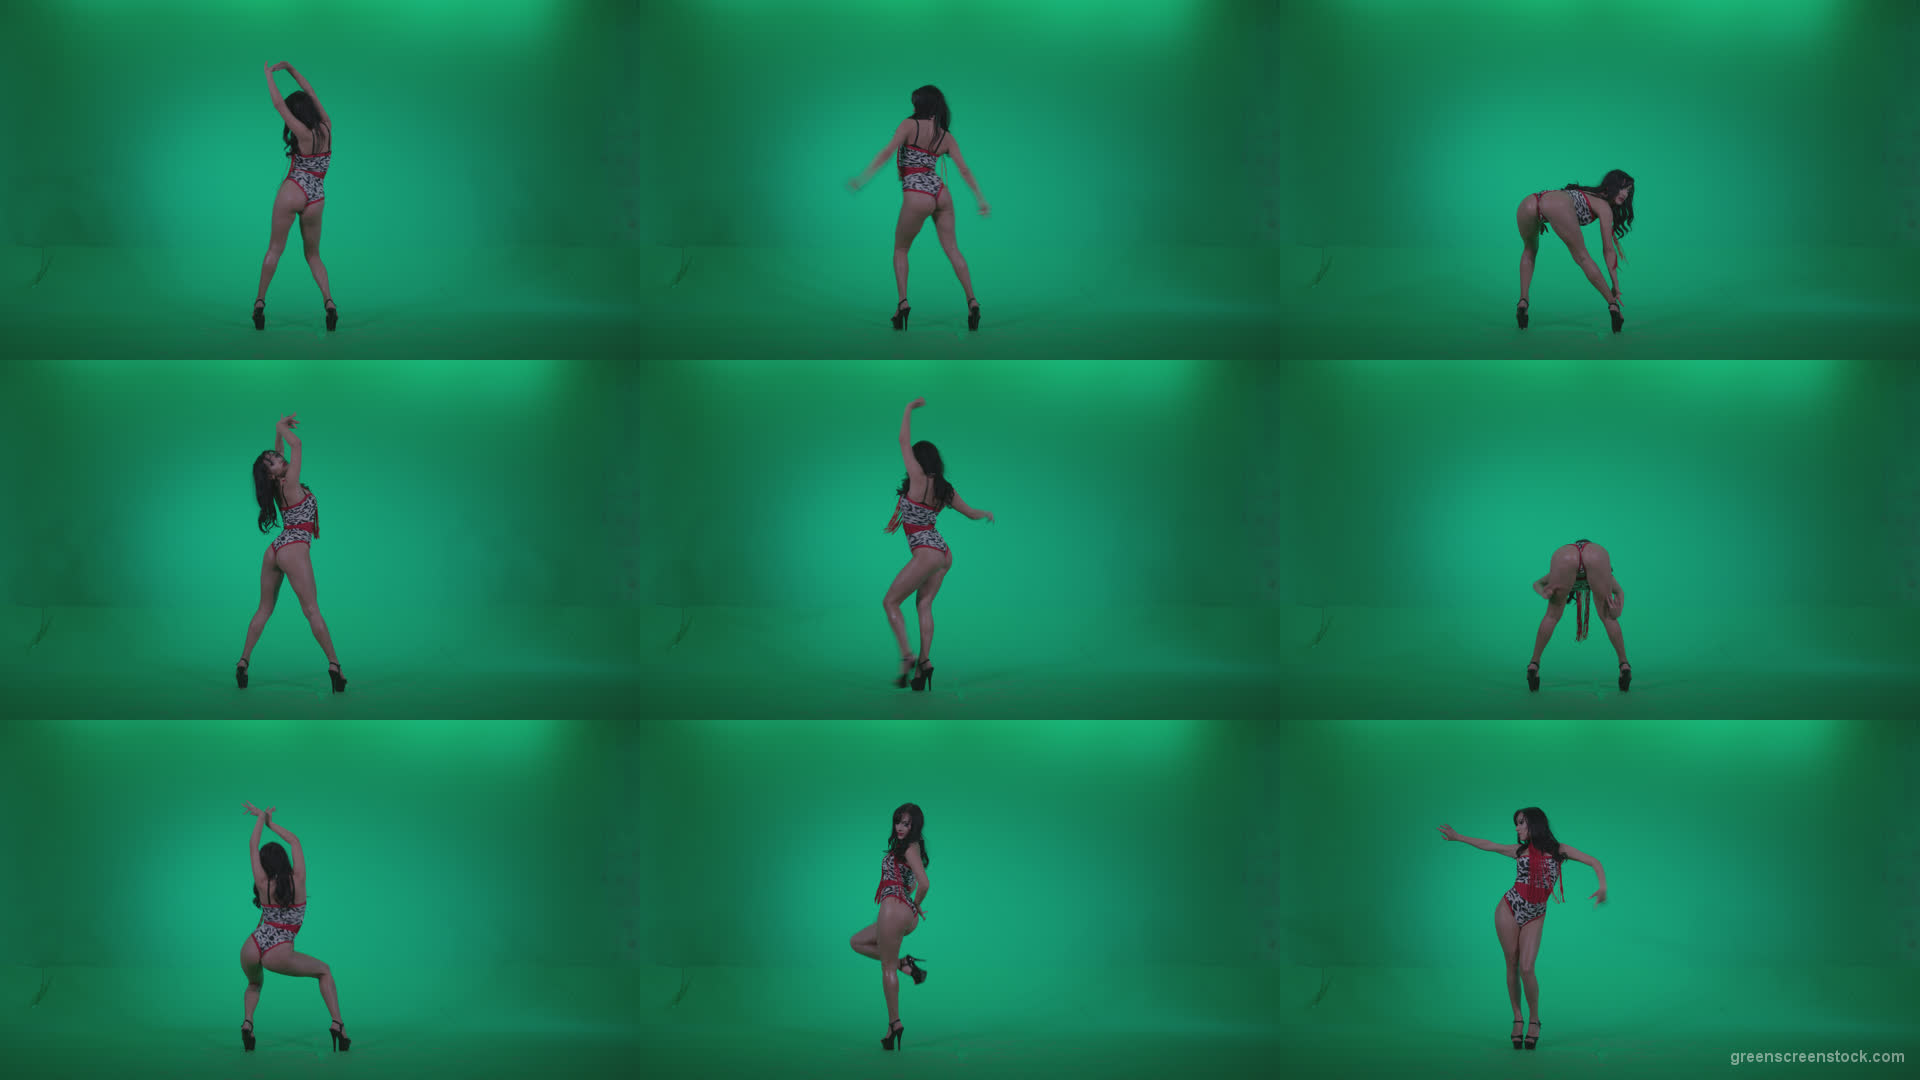 Go-go-Dancer-Red-Dress-r3-Green-Screen-Video-Footage Green Screen Stock